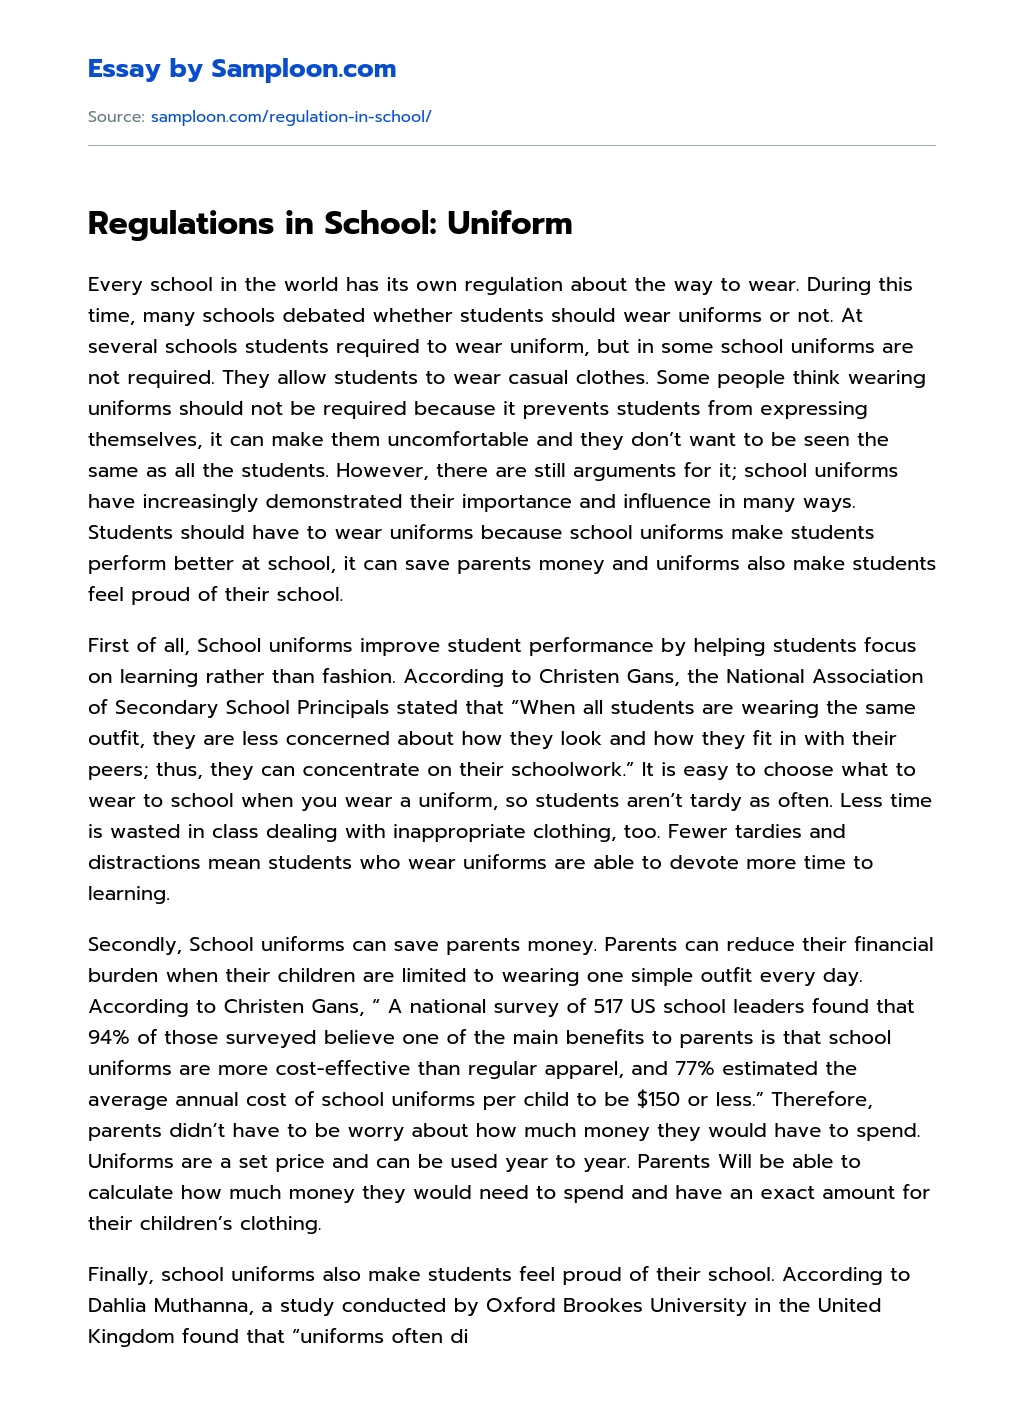 Regulations in School: Uniform Argumentative Essay essay